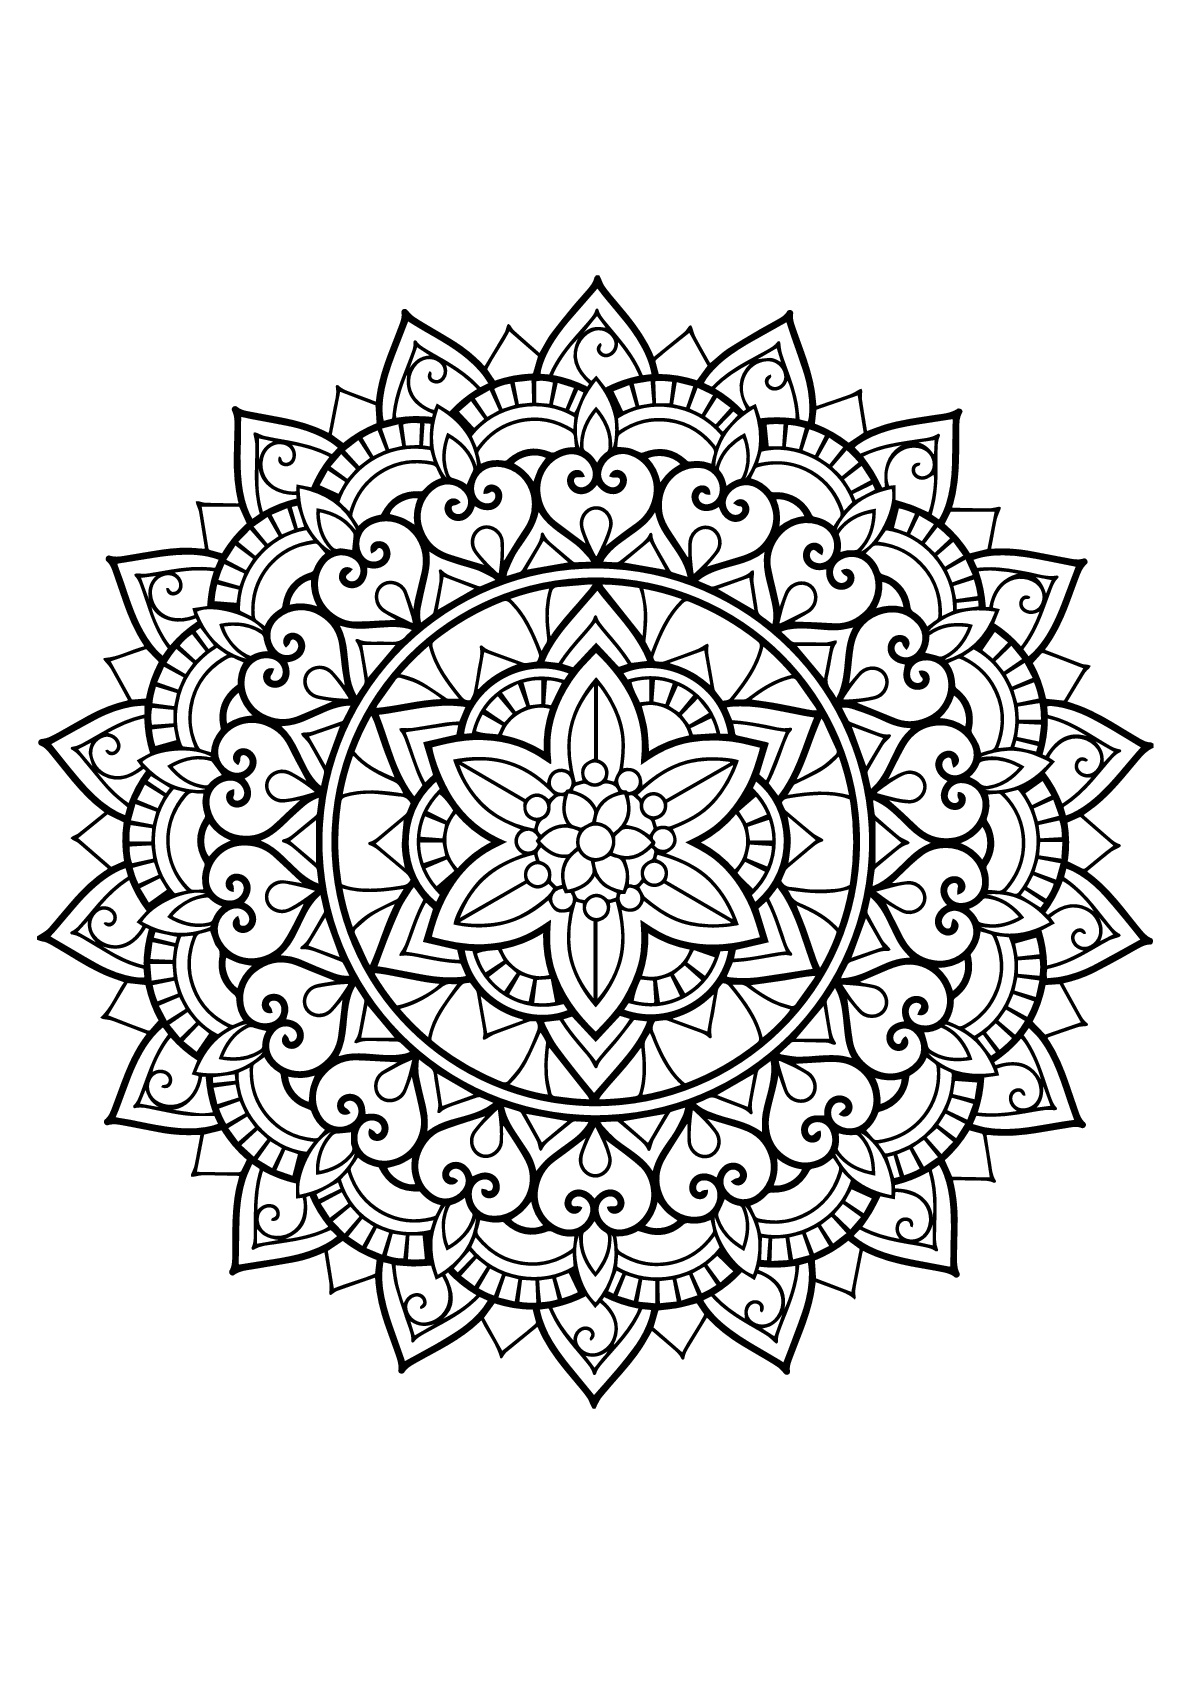 Mandala from free coloring books for adults - 29 - Mandalas Adult ...